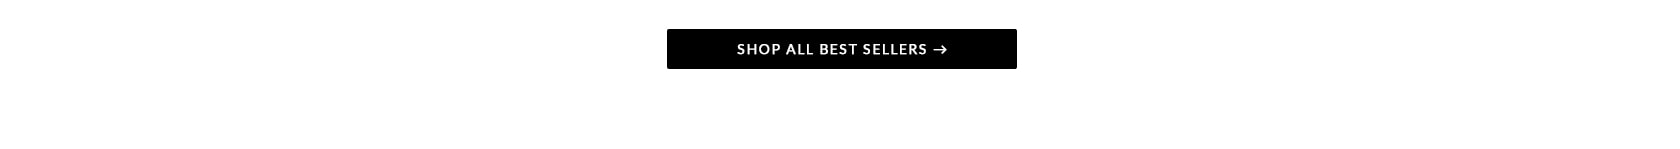 Best Sellers – Shop Now